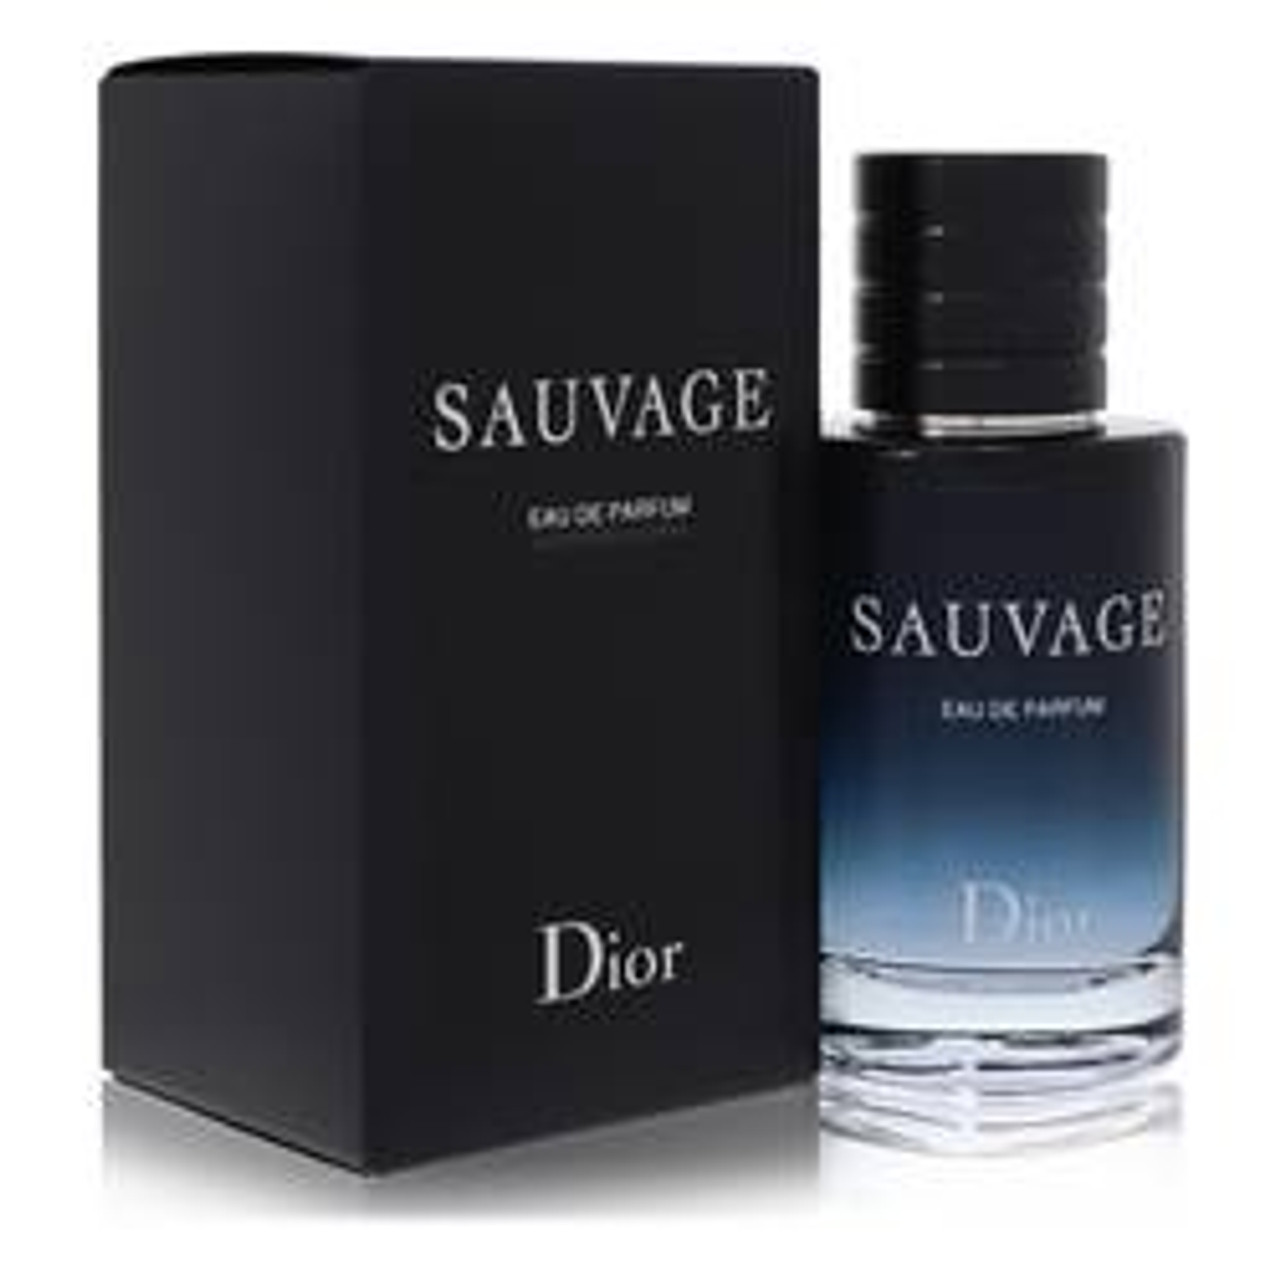 Sauvage Cologne By Christian Dior Eau De Parfum Spray 2 oz for Men - *Pre-Order